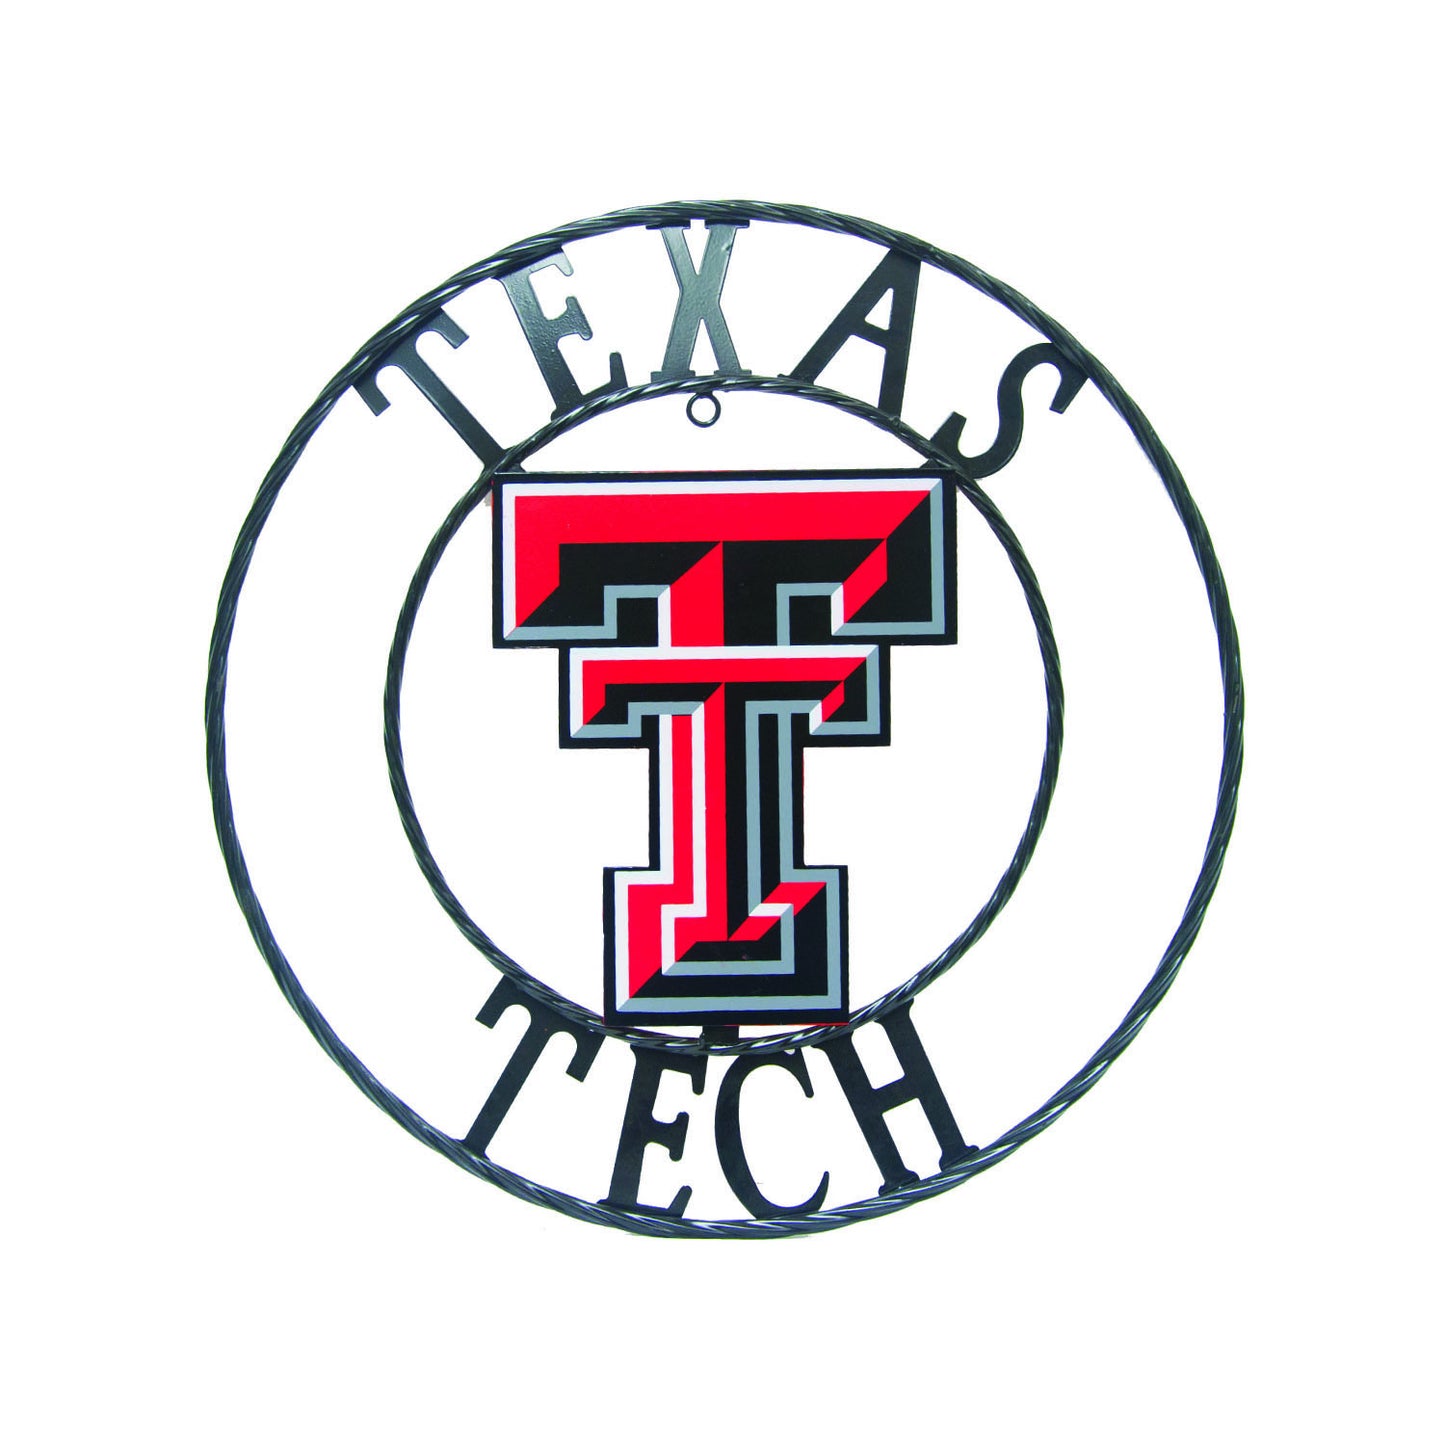 Texas Tech University "Double T" Wrought Iron Wall Decor